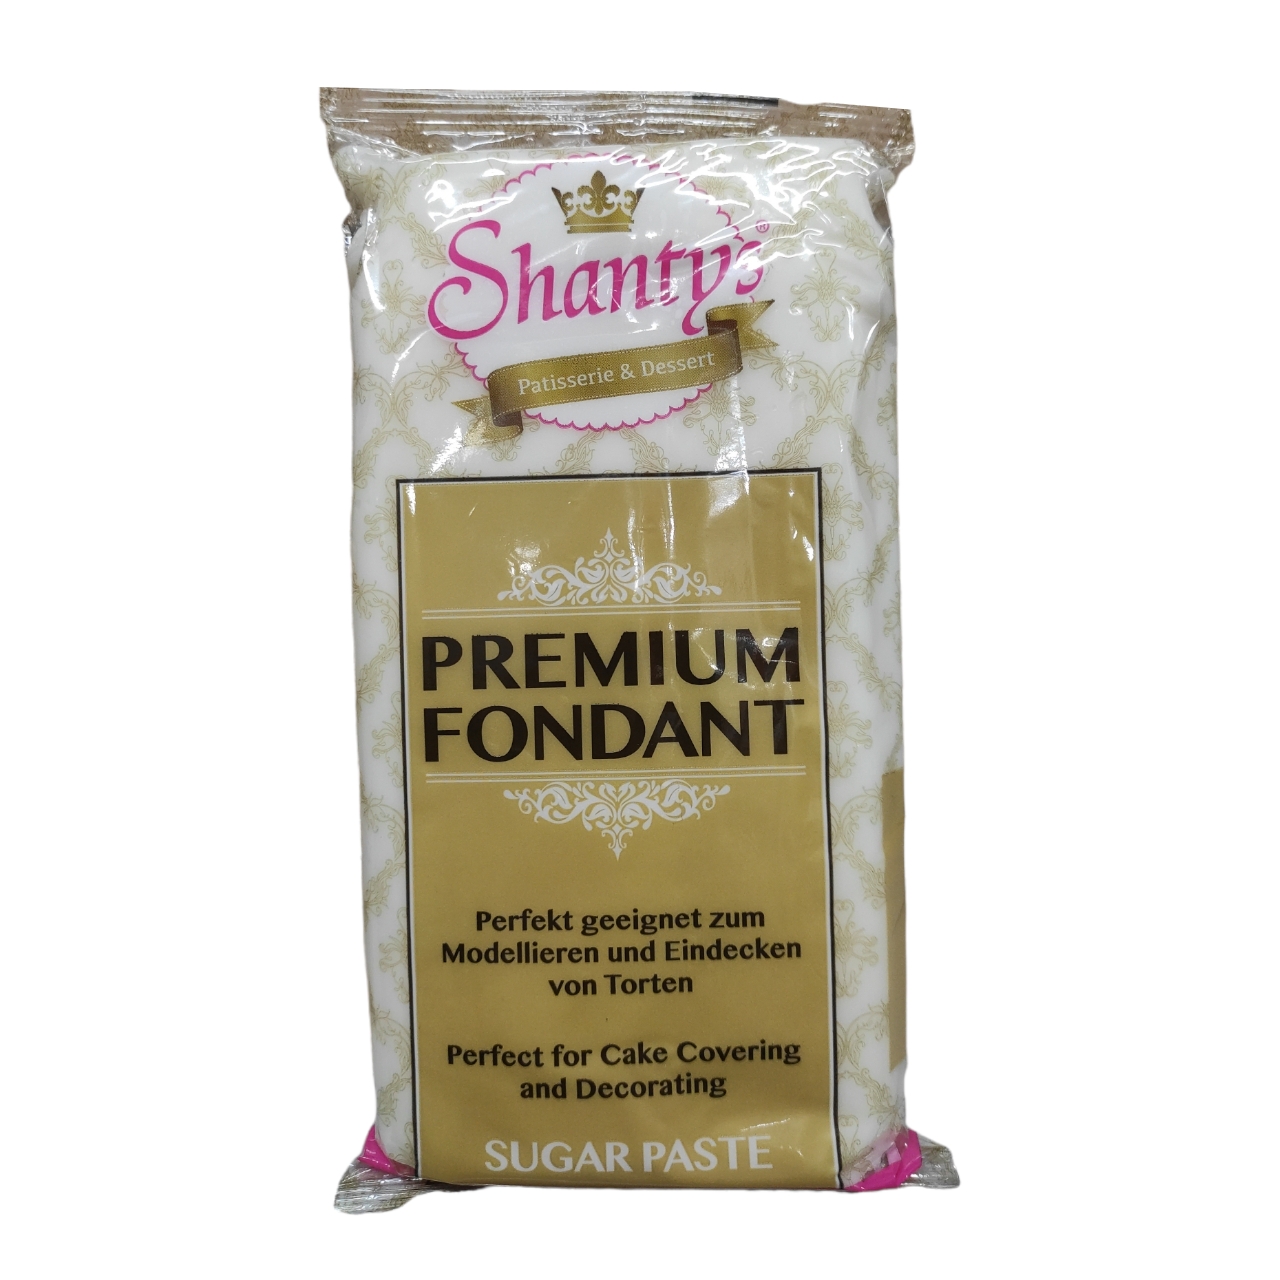 Shantys Premium Fondant / Rollfondant - WEISS - 1 Kg